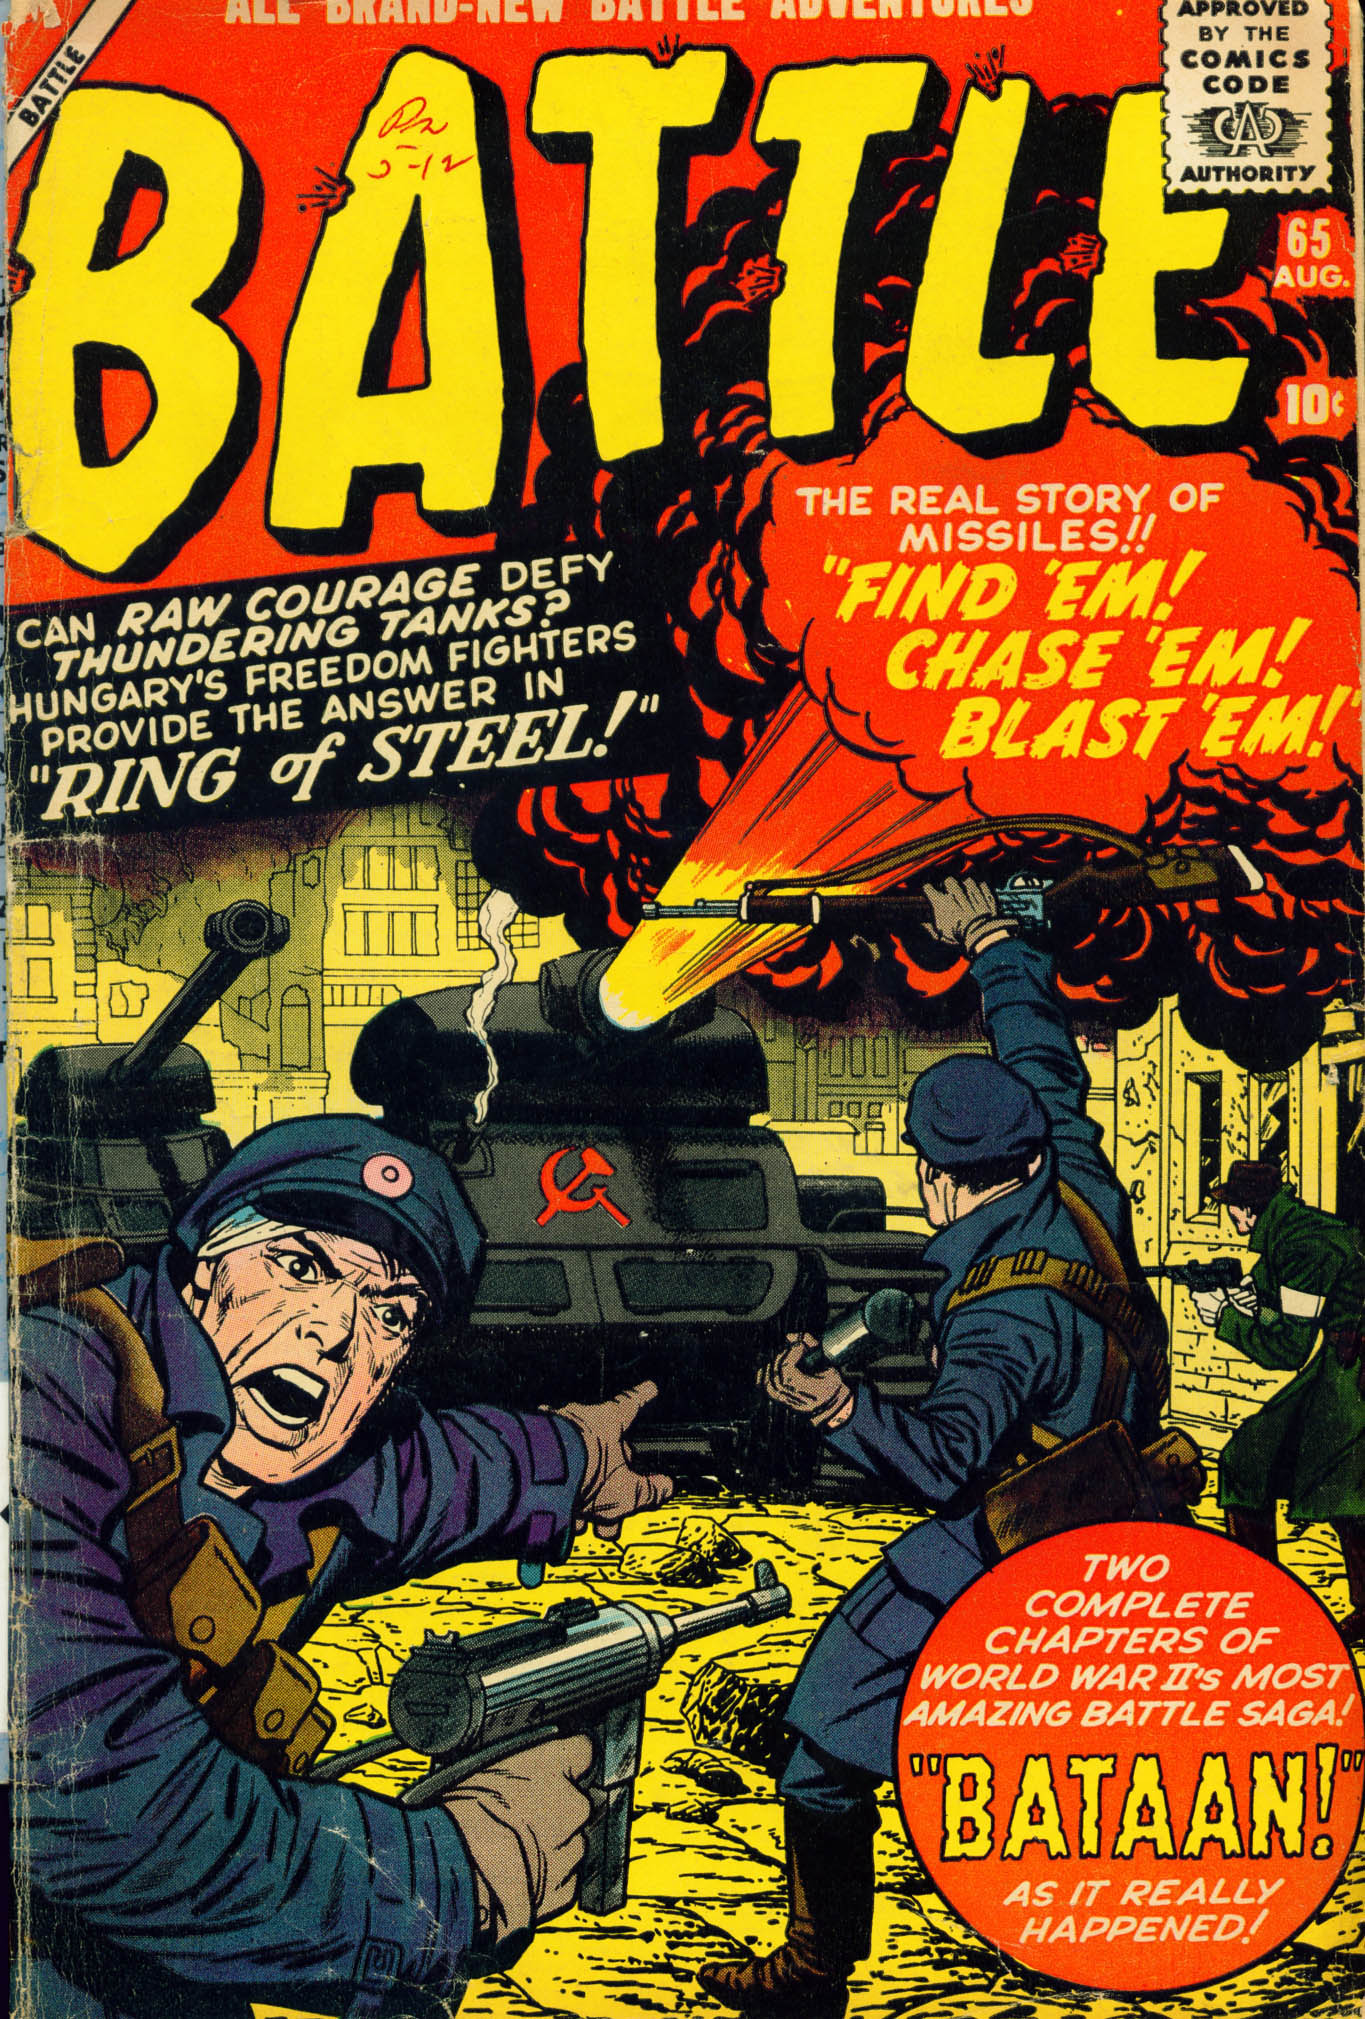 Read online Battle comic -  Issue #65 - 1